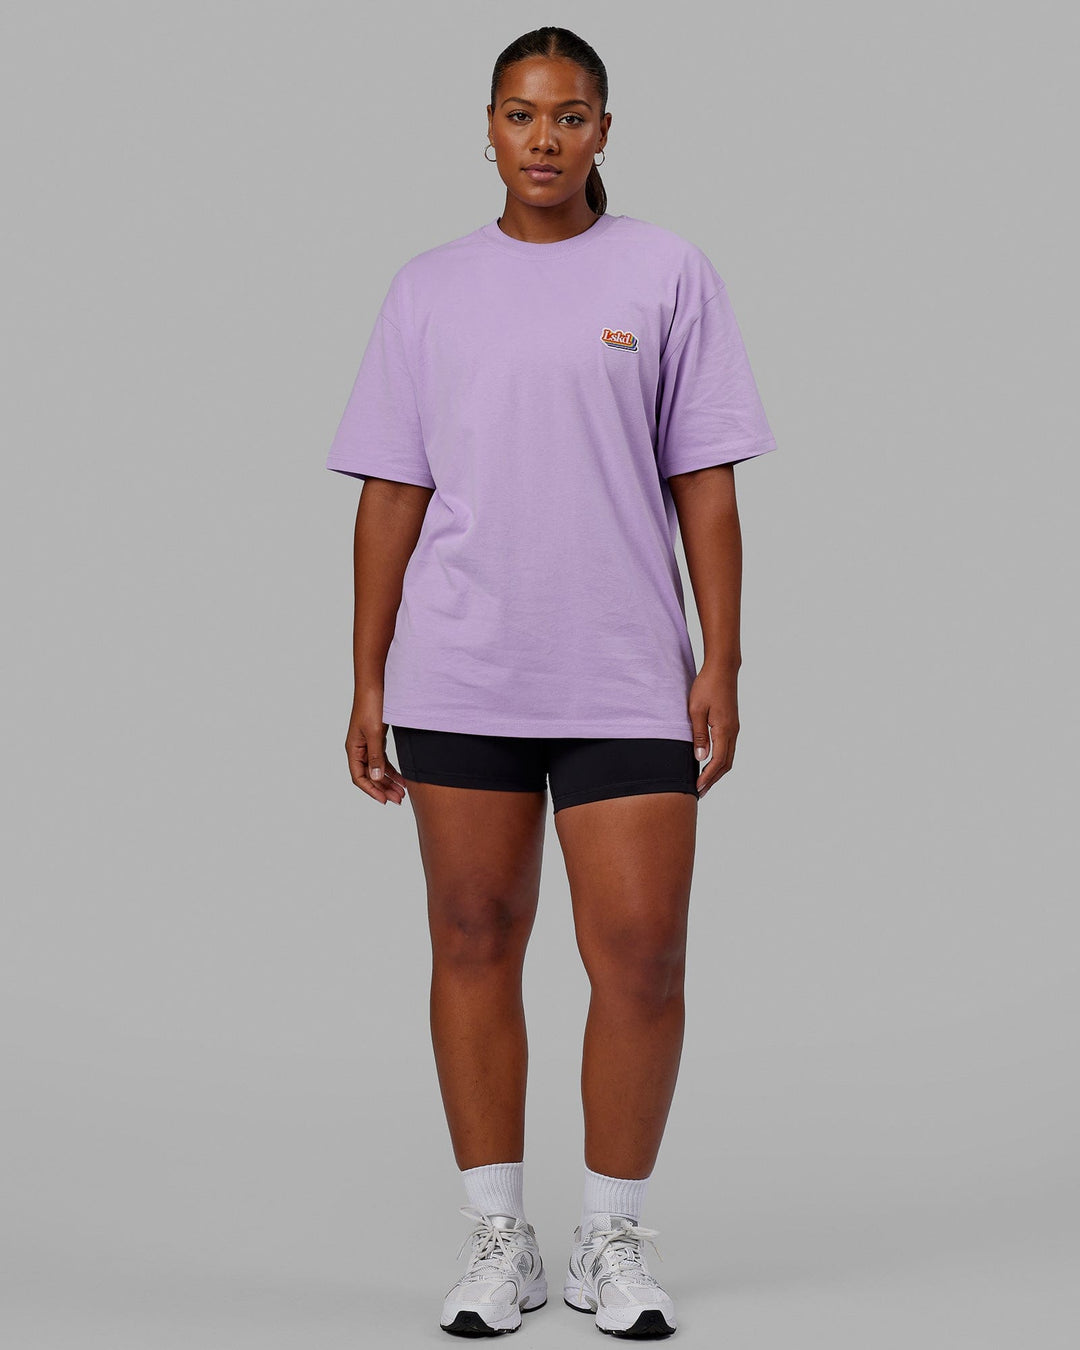 Woman wearing Unisex Radiate Heavyweight Tee Oversize - Pale Lilac